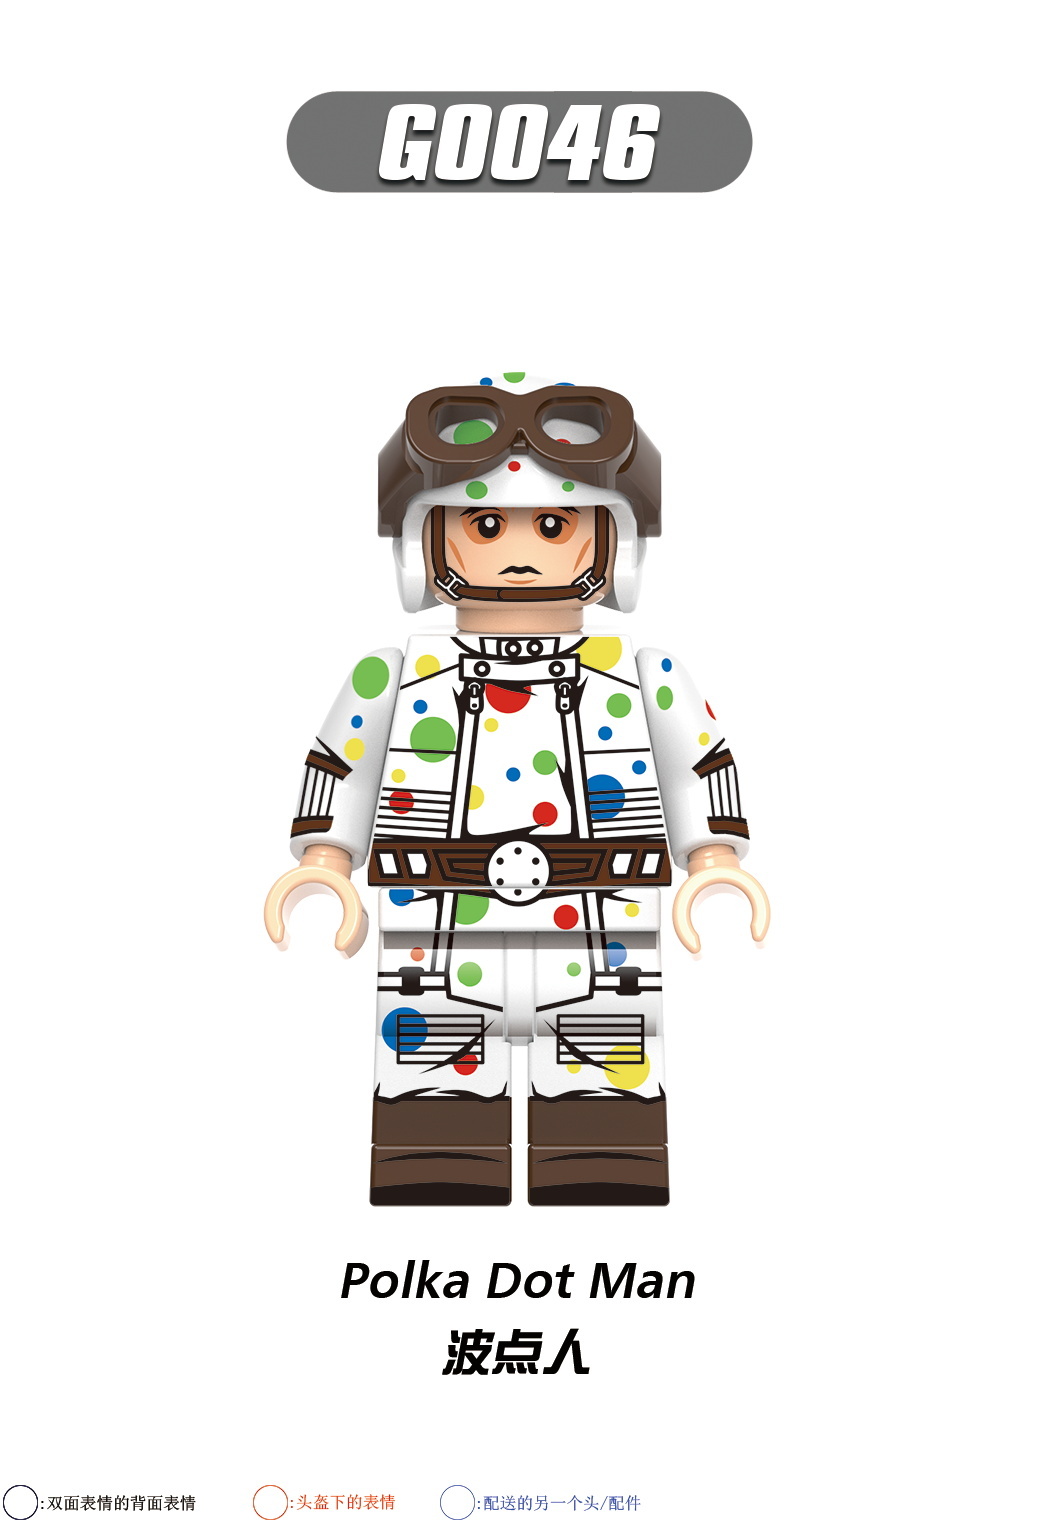 G0106 G0041 G0042 G0043 G0044 G0045 G0046 G0047 G0048 Super Heroes Amanda Waller Mongul Thinker Javelin Polka Dot Man Savant Building Blocks Action Figures Educational Toys For Kids